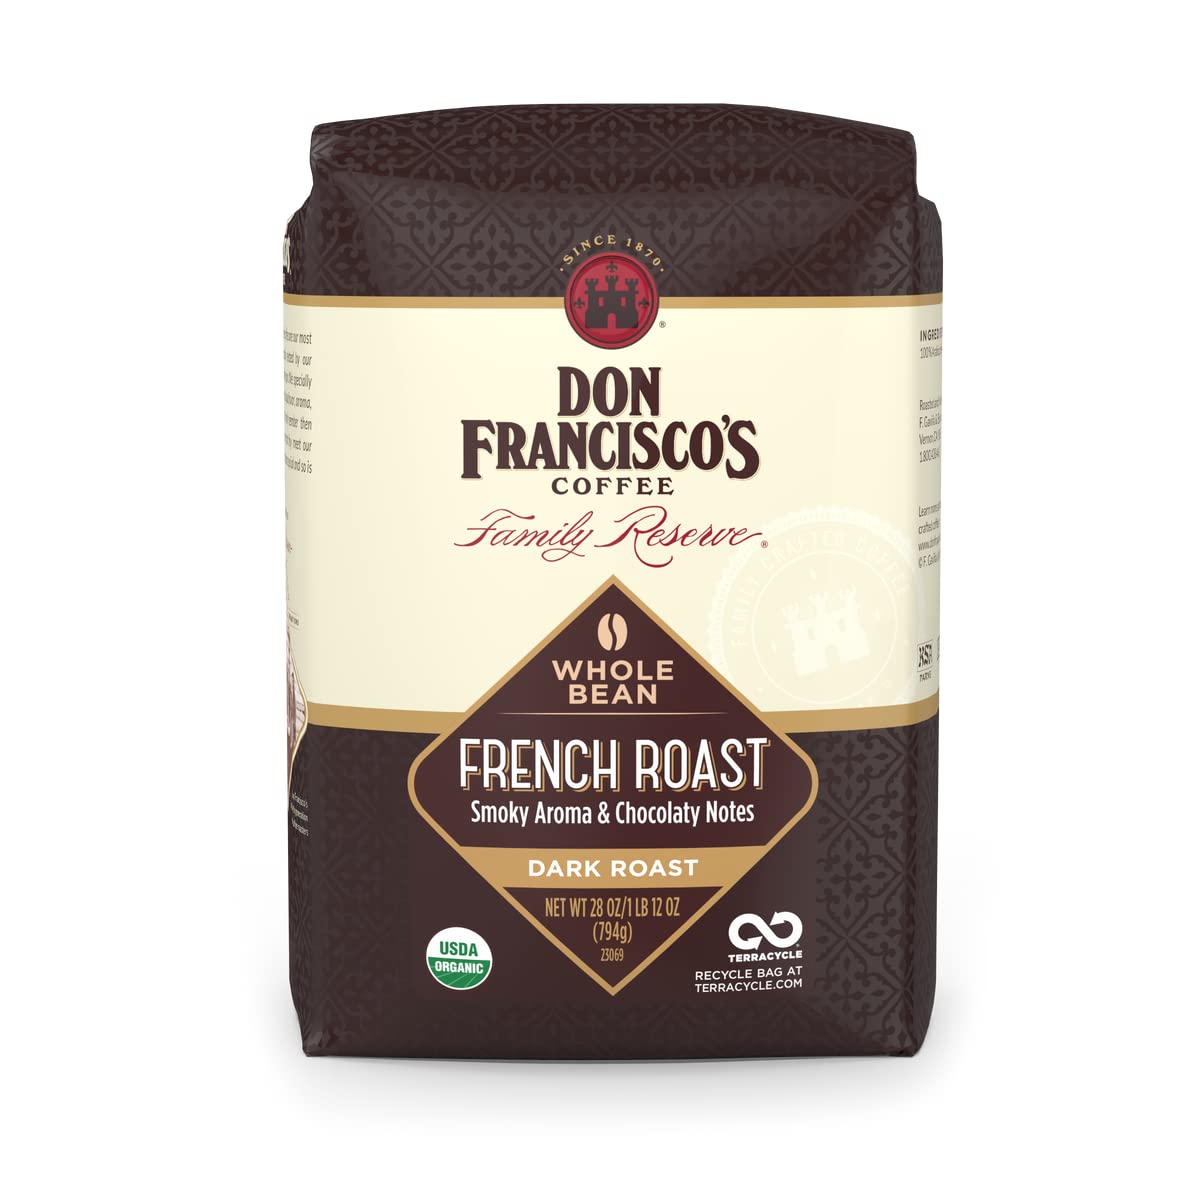 28-Oz Don Francisco's Whole Bean Dark Roast Coffee (French Roast) $8.35 w/ S&S + Free Shipping w/ Prime or on $25+